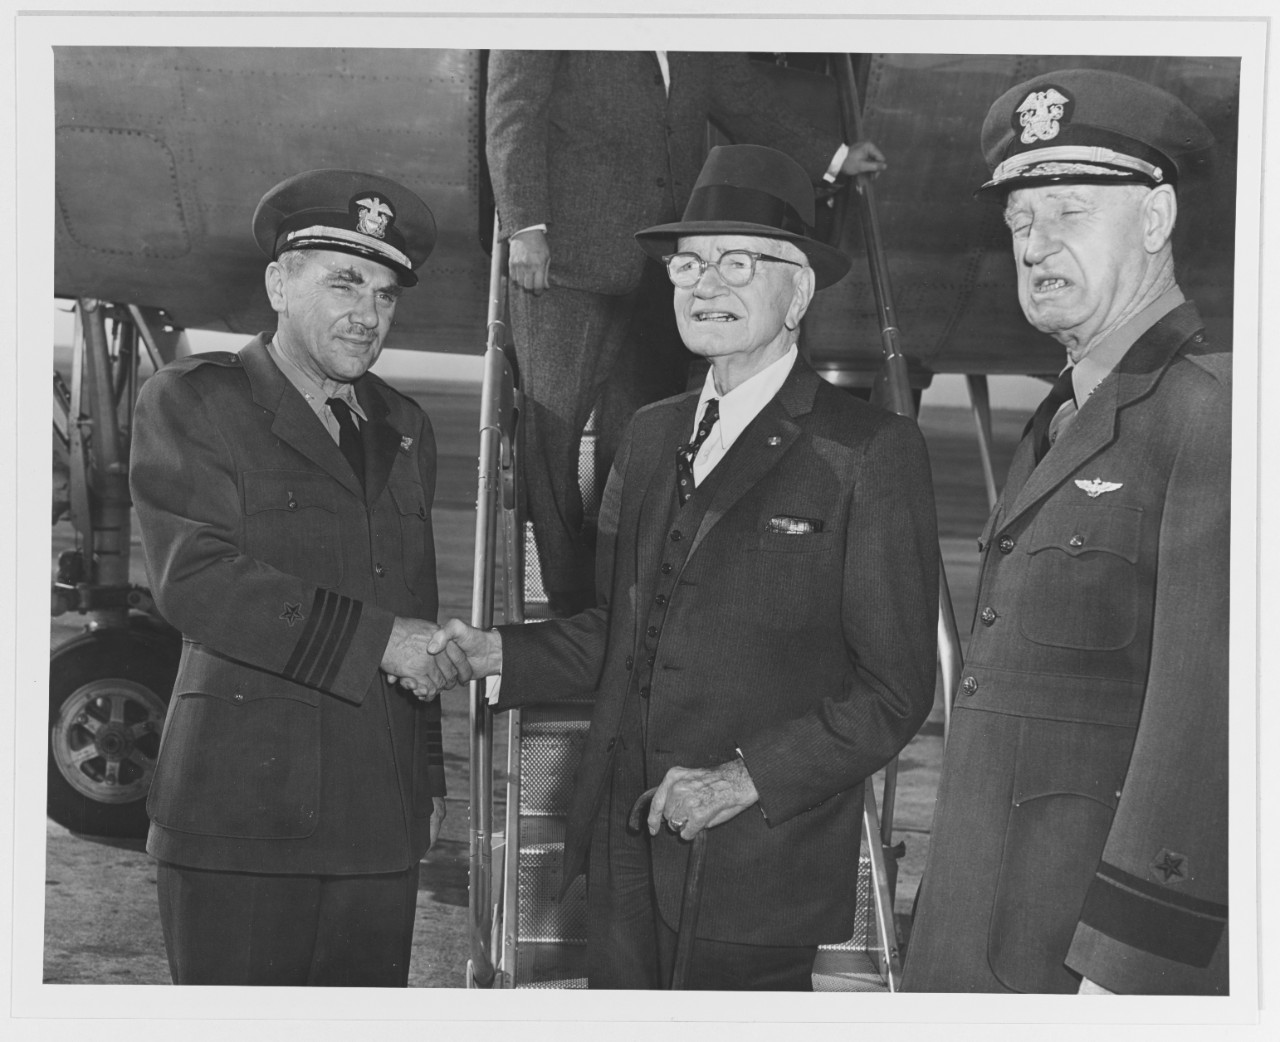 Captain James H. Mills, Jr., Fleet Admiral William F. Halsey, USN, and Rear Admiral R. F. Hickey, USN